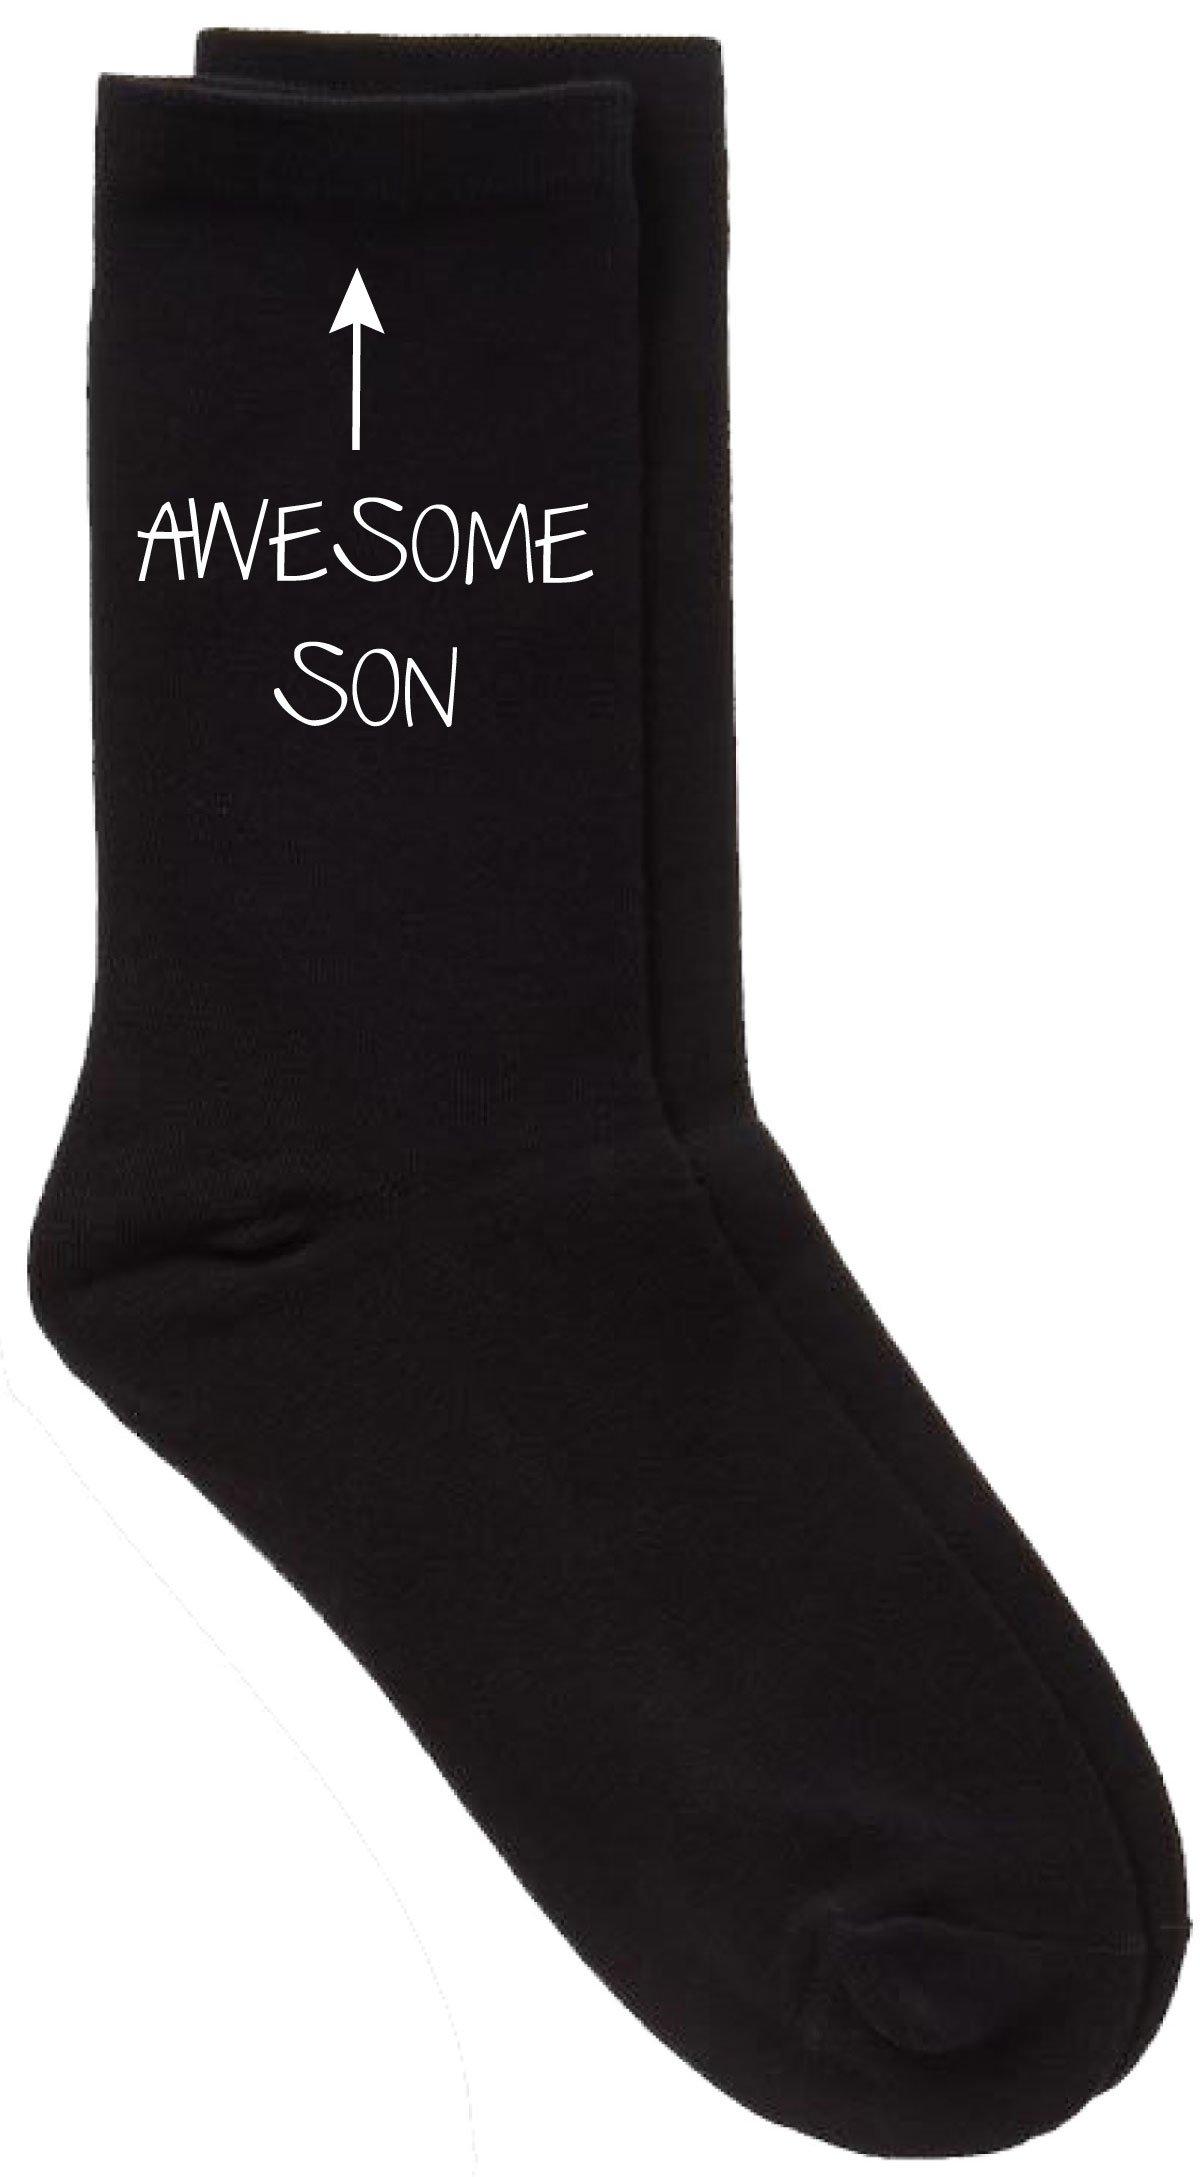 Awesome Son Black Calf Socks